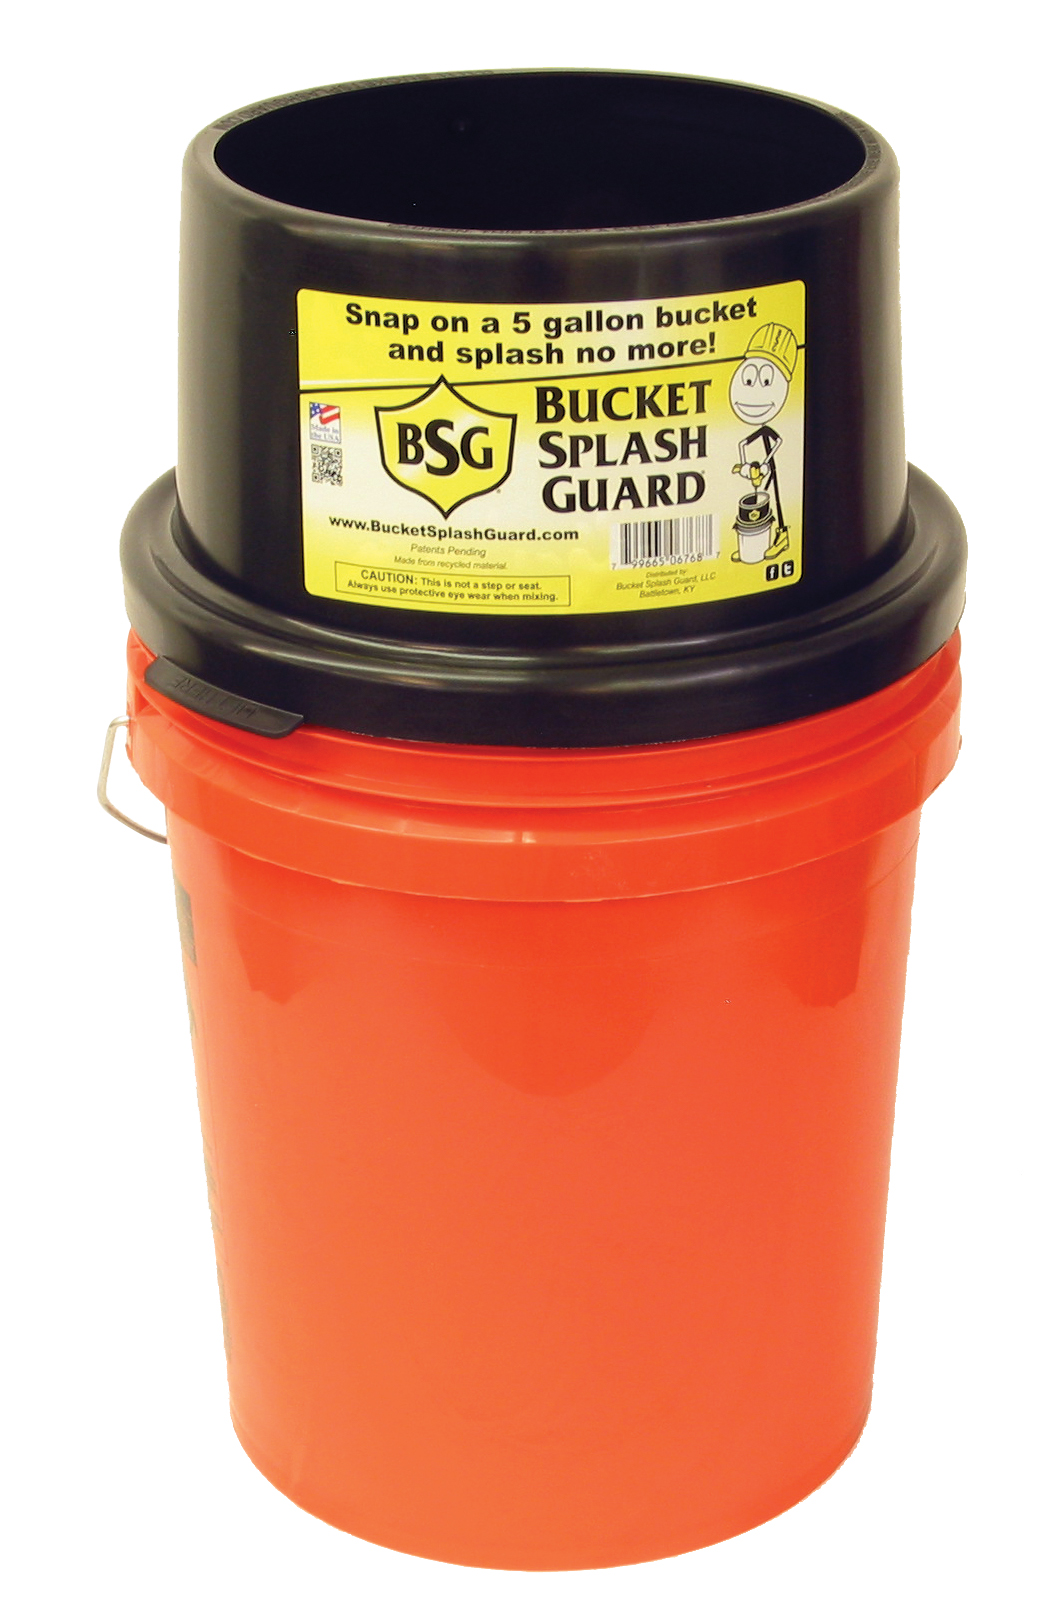 Bucket Splash Guard - image 2